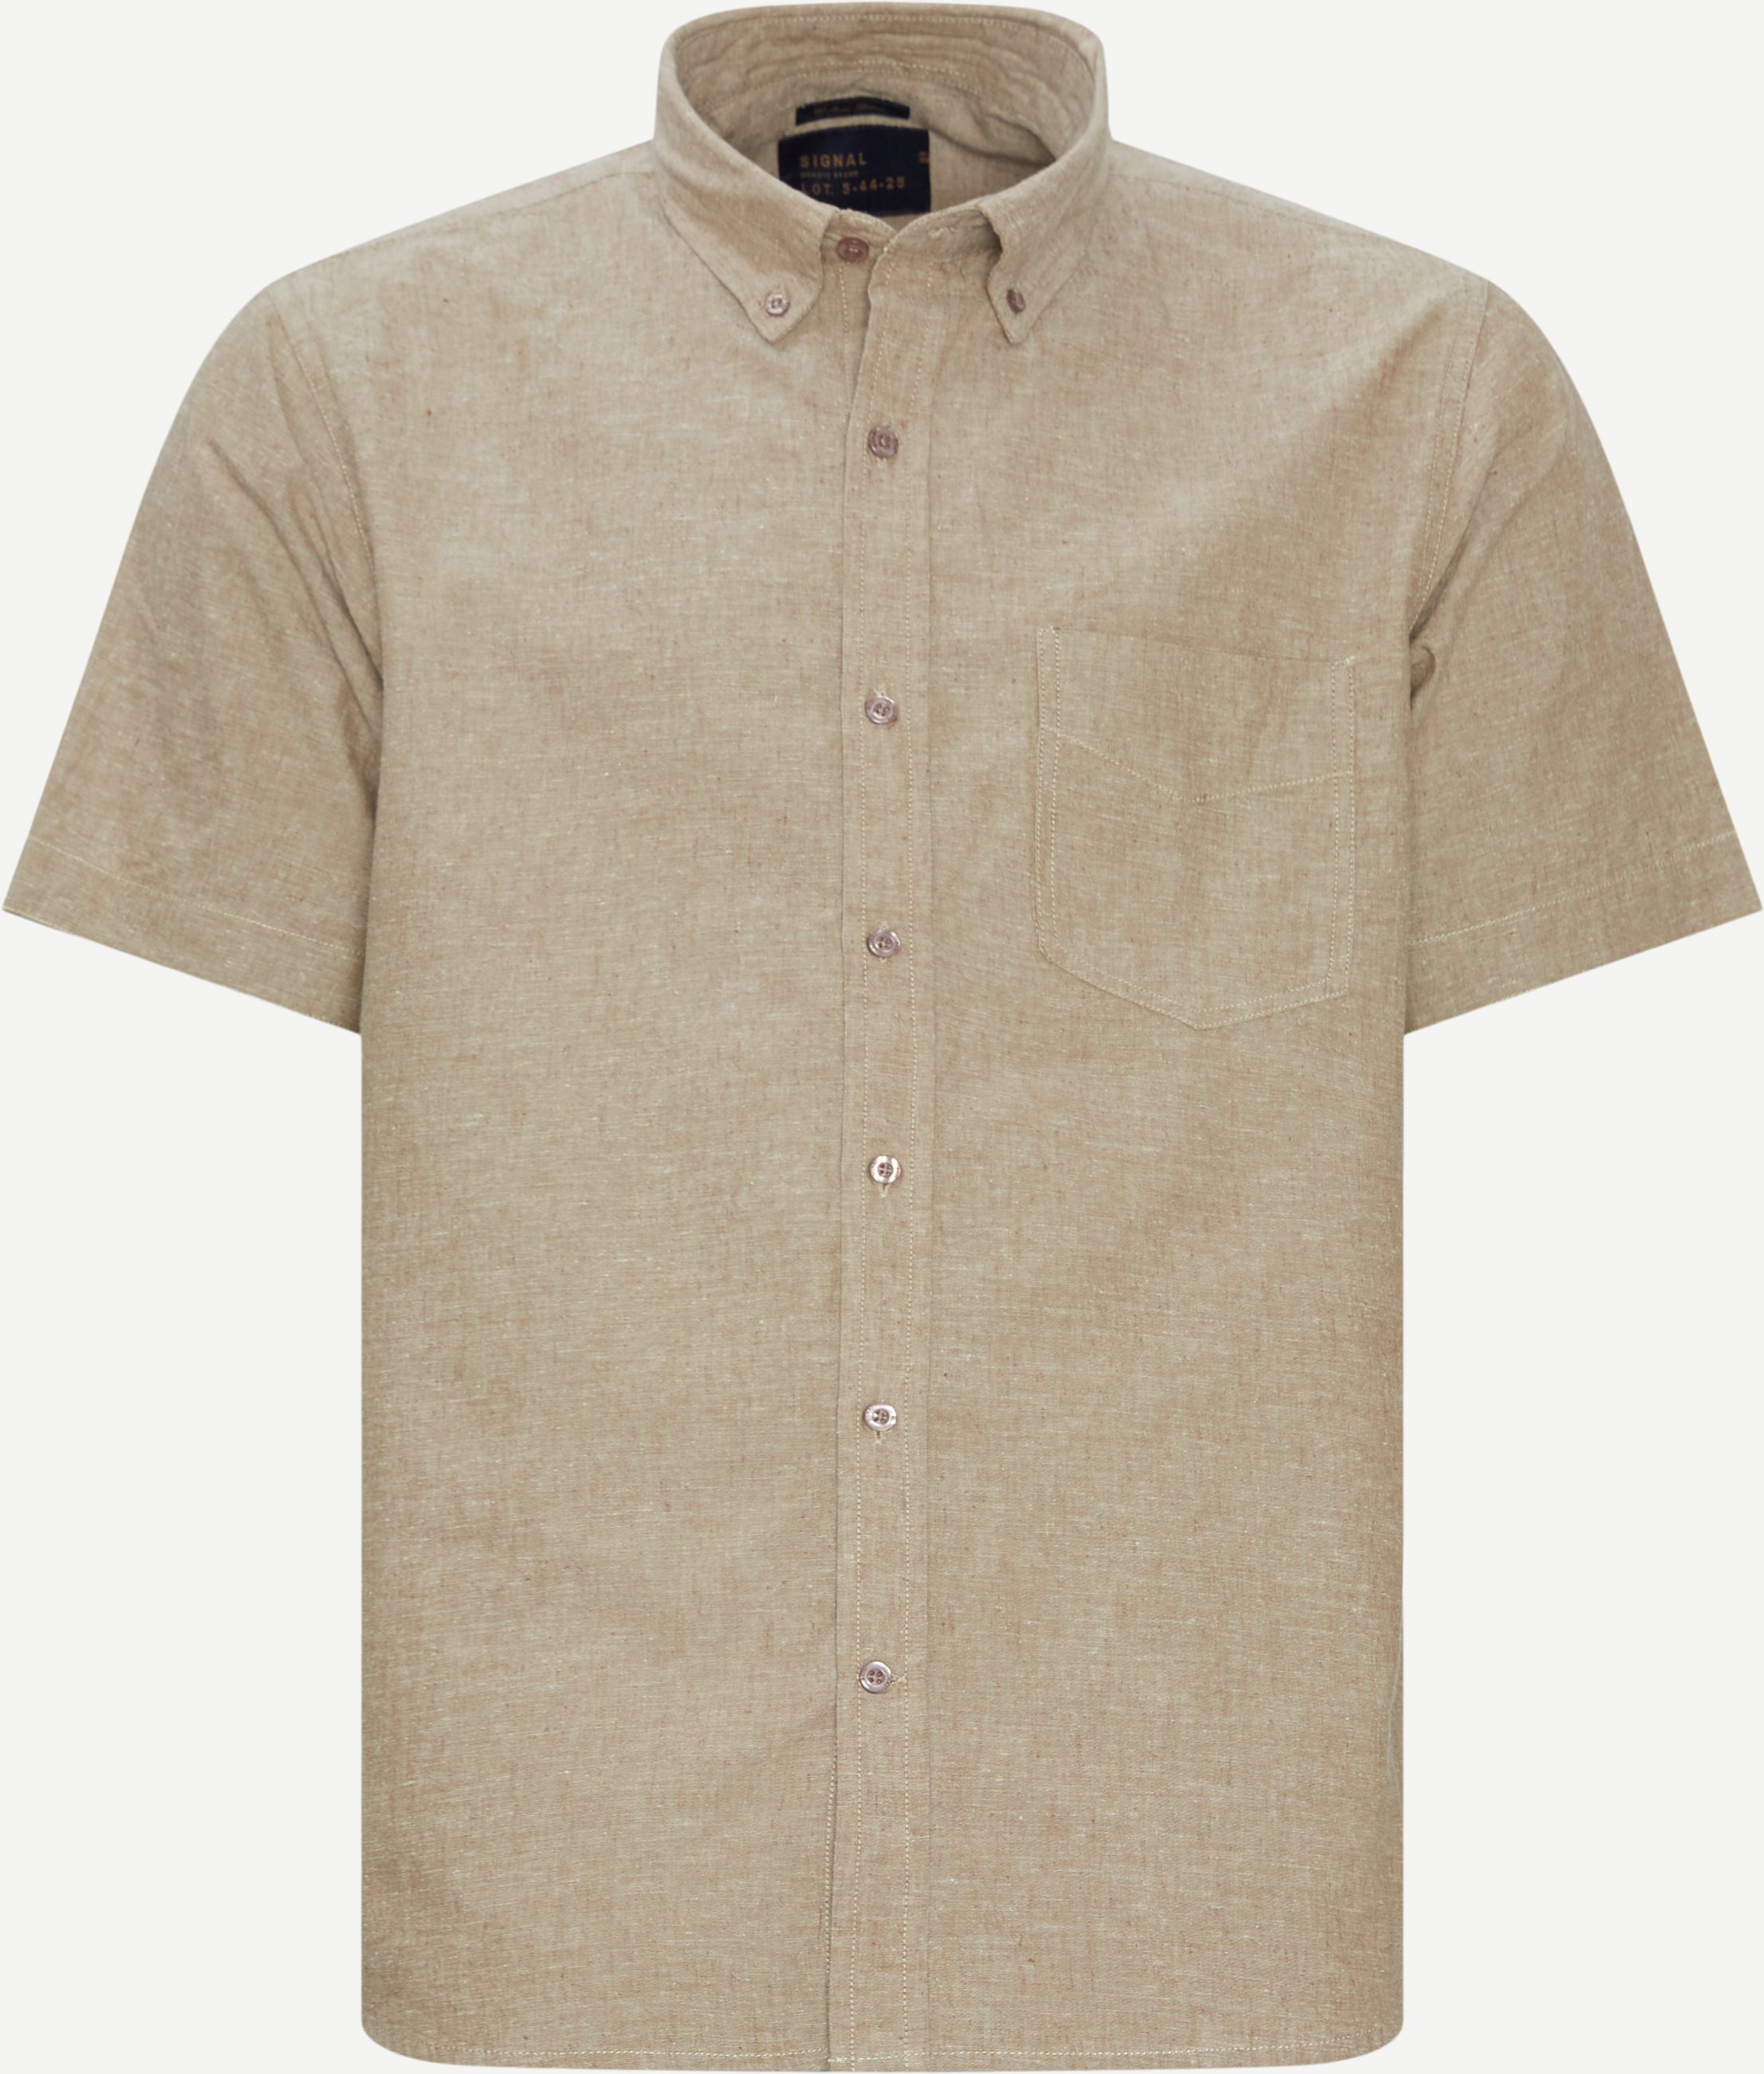 Signal Short-sleeved shirts 15512 1773 Sand